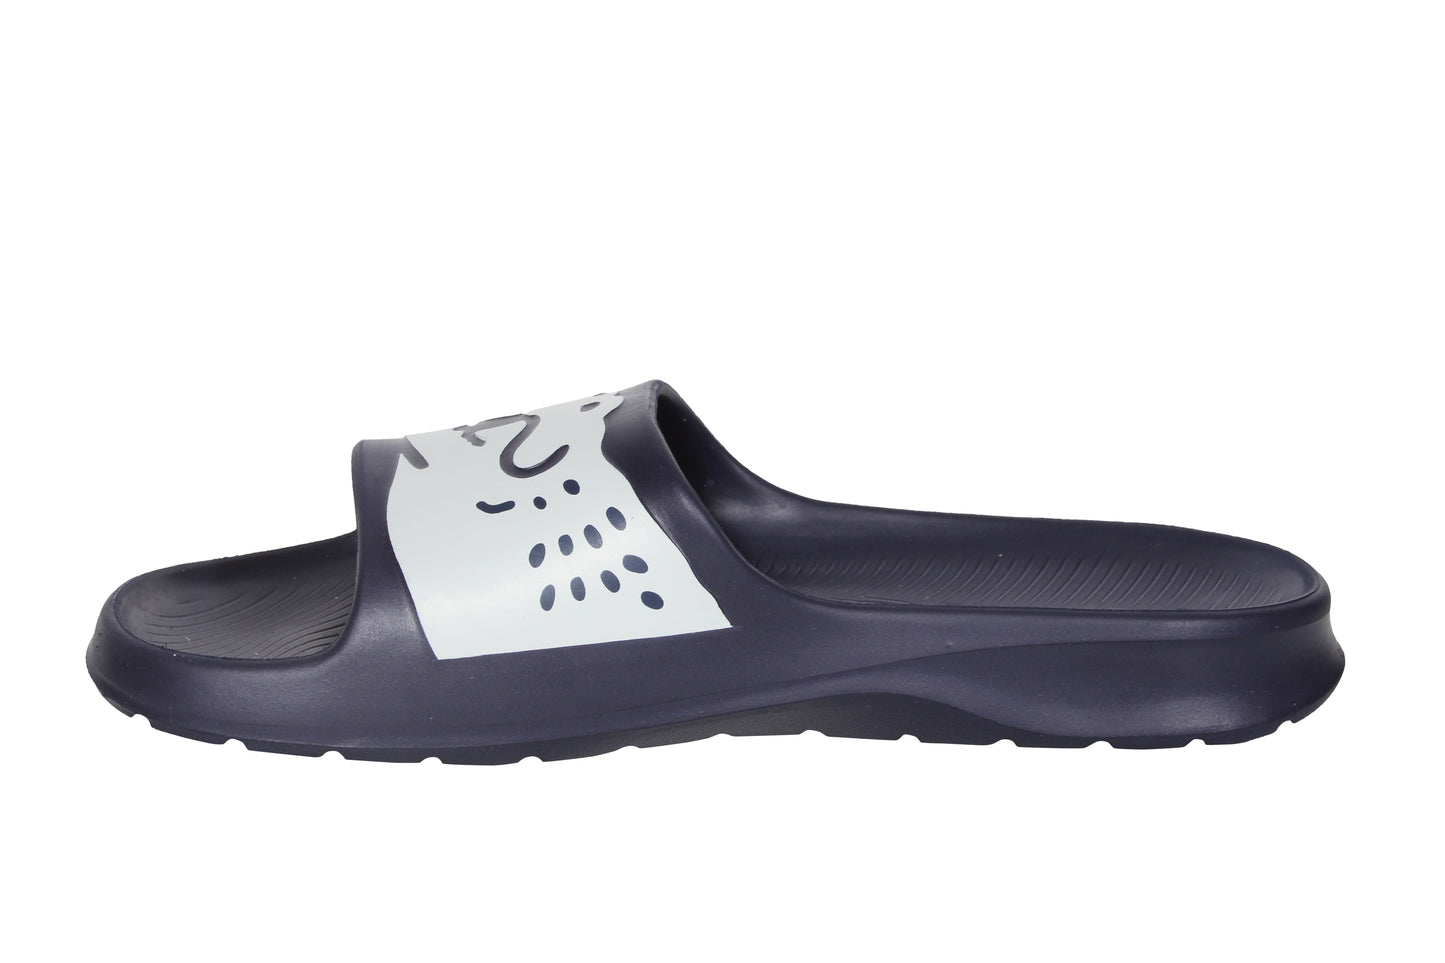 Lacoste Croco 2.0 0721 2 CMA Men's Synthetic Slide Sandals 7-41CMA0010092